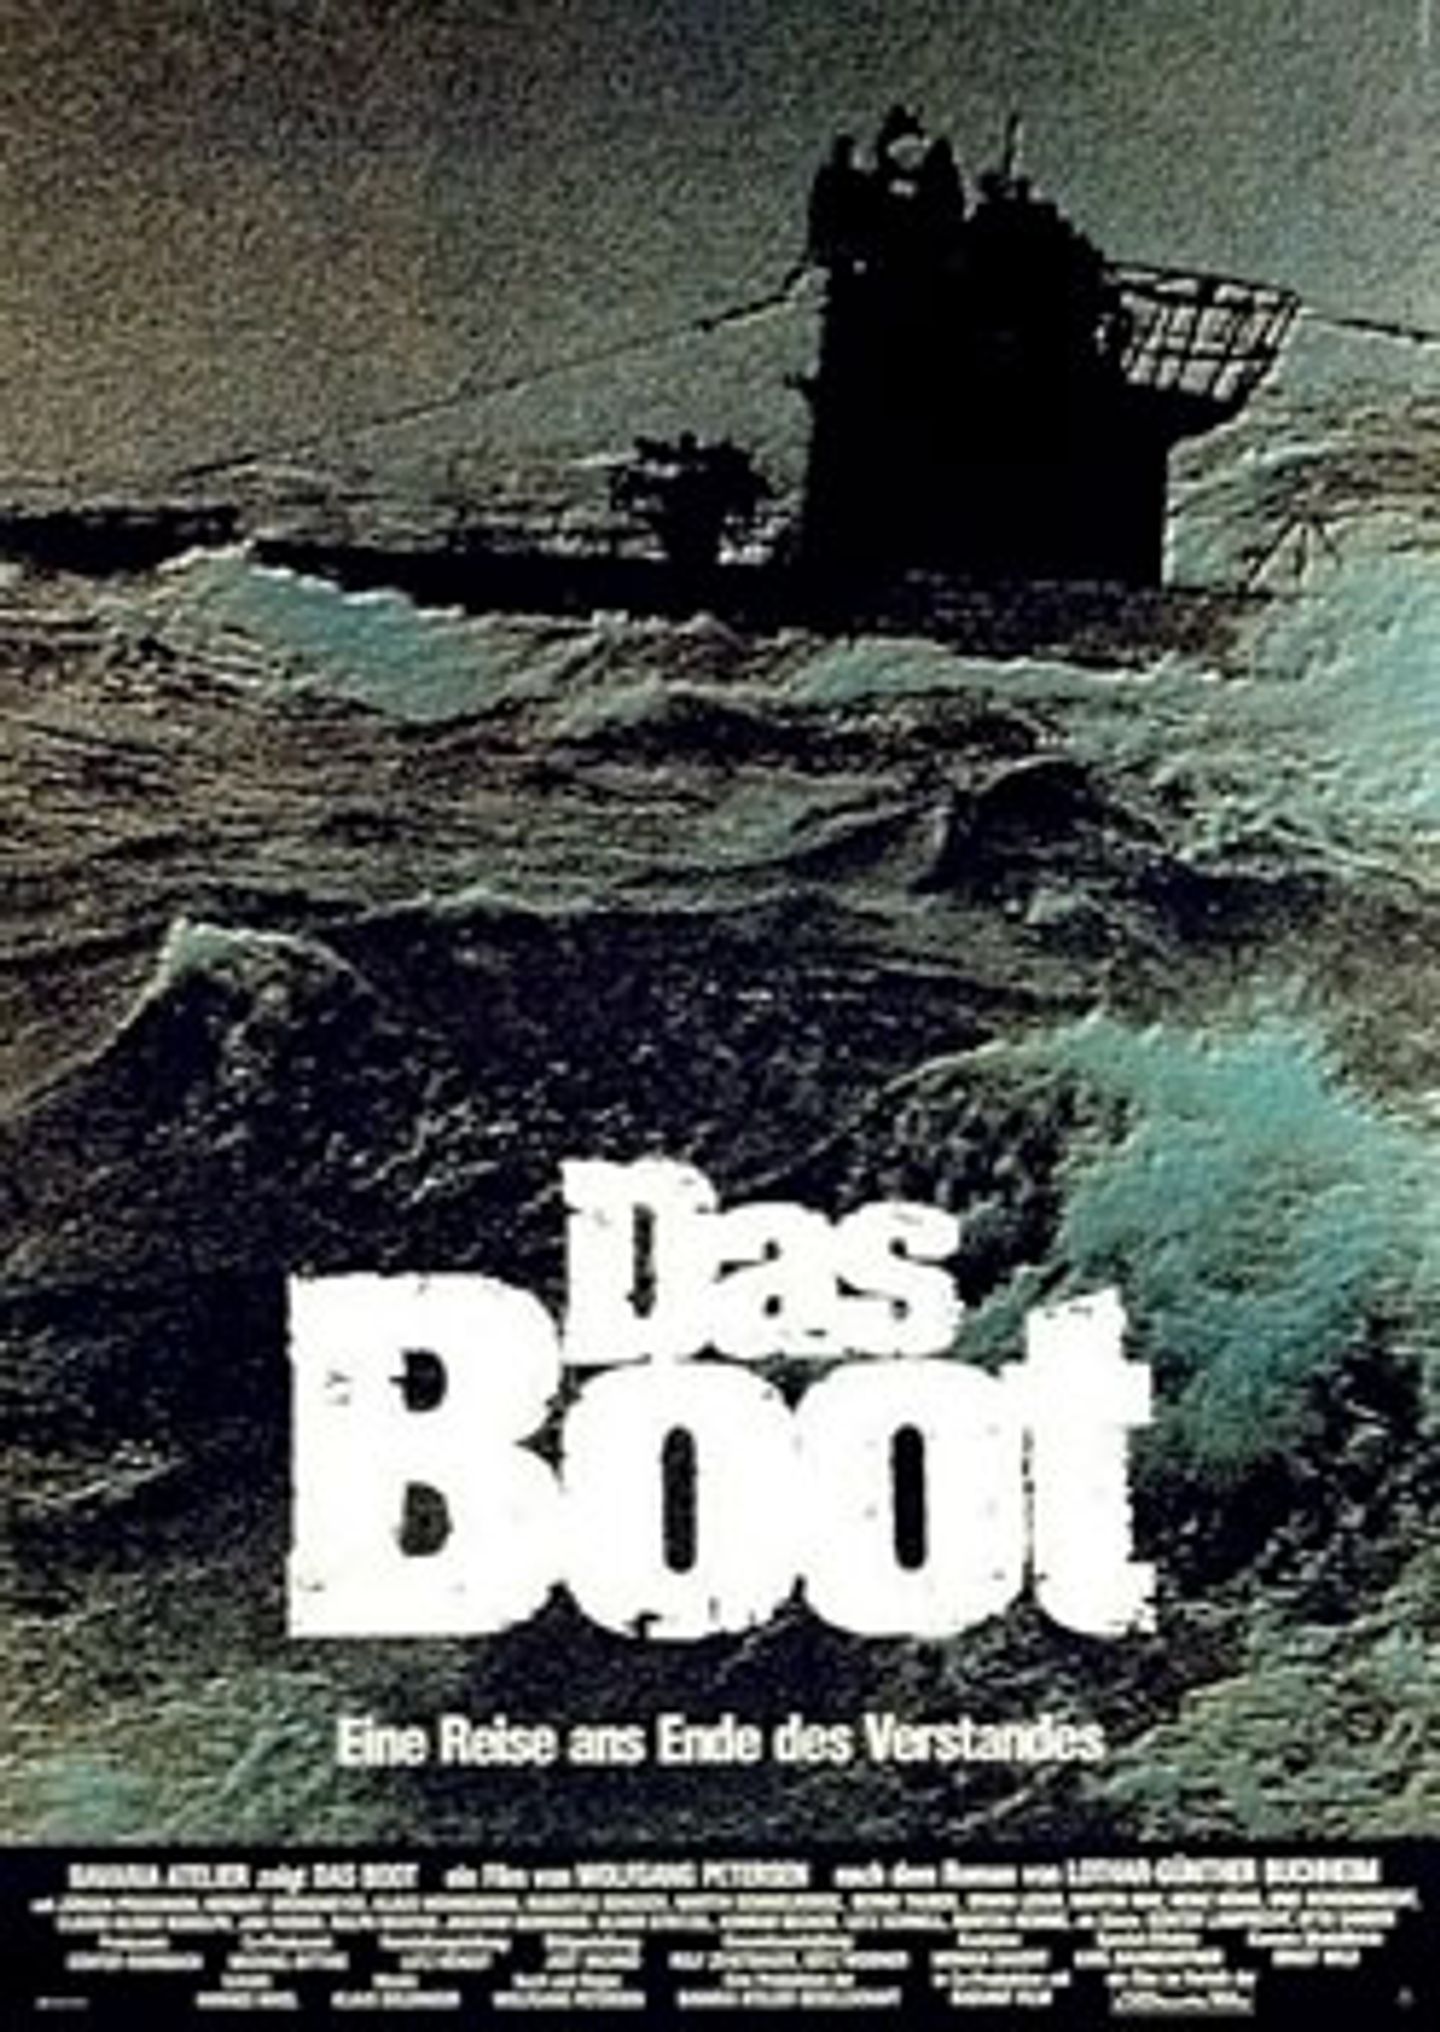 Plakat for 'Das Boot'